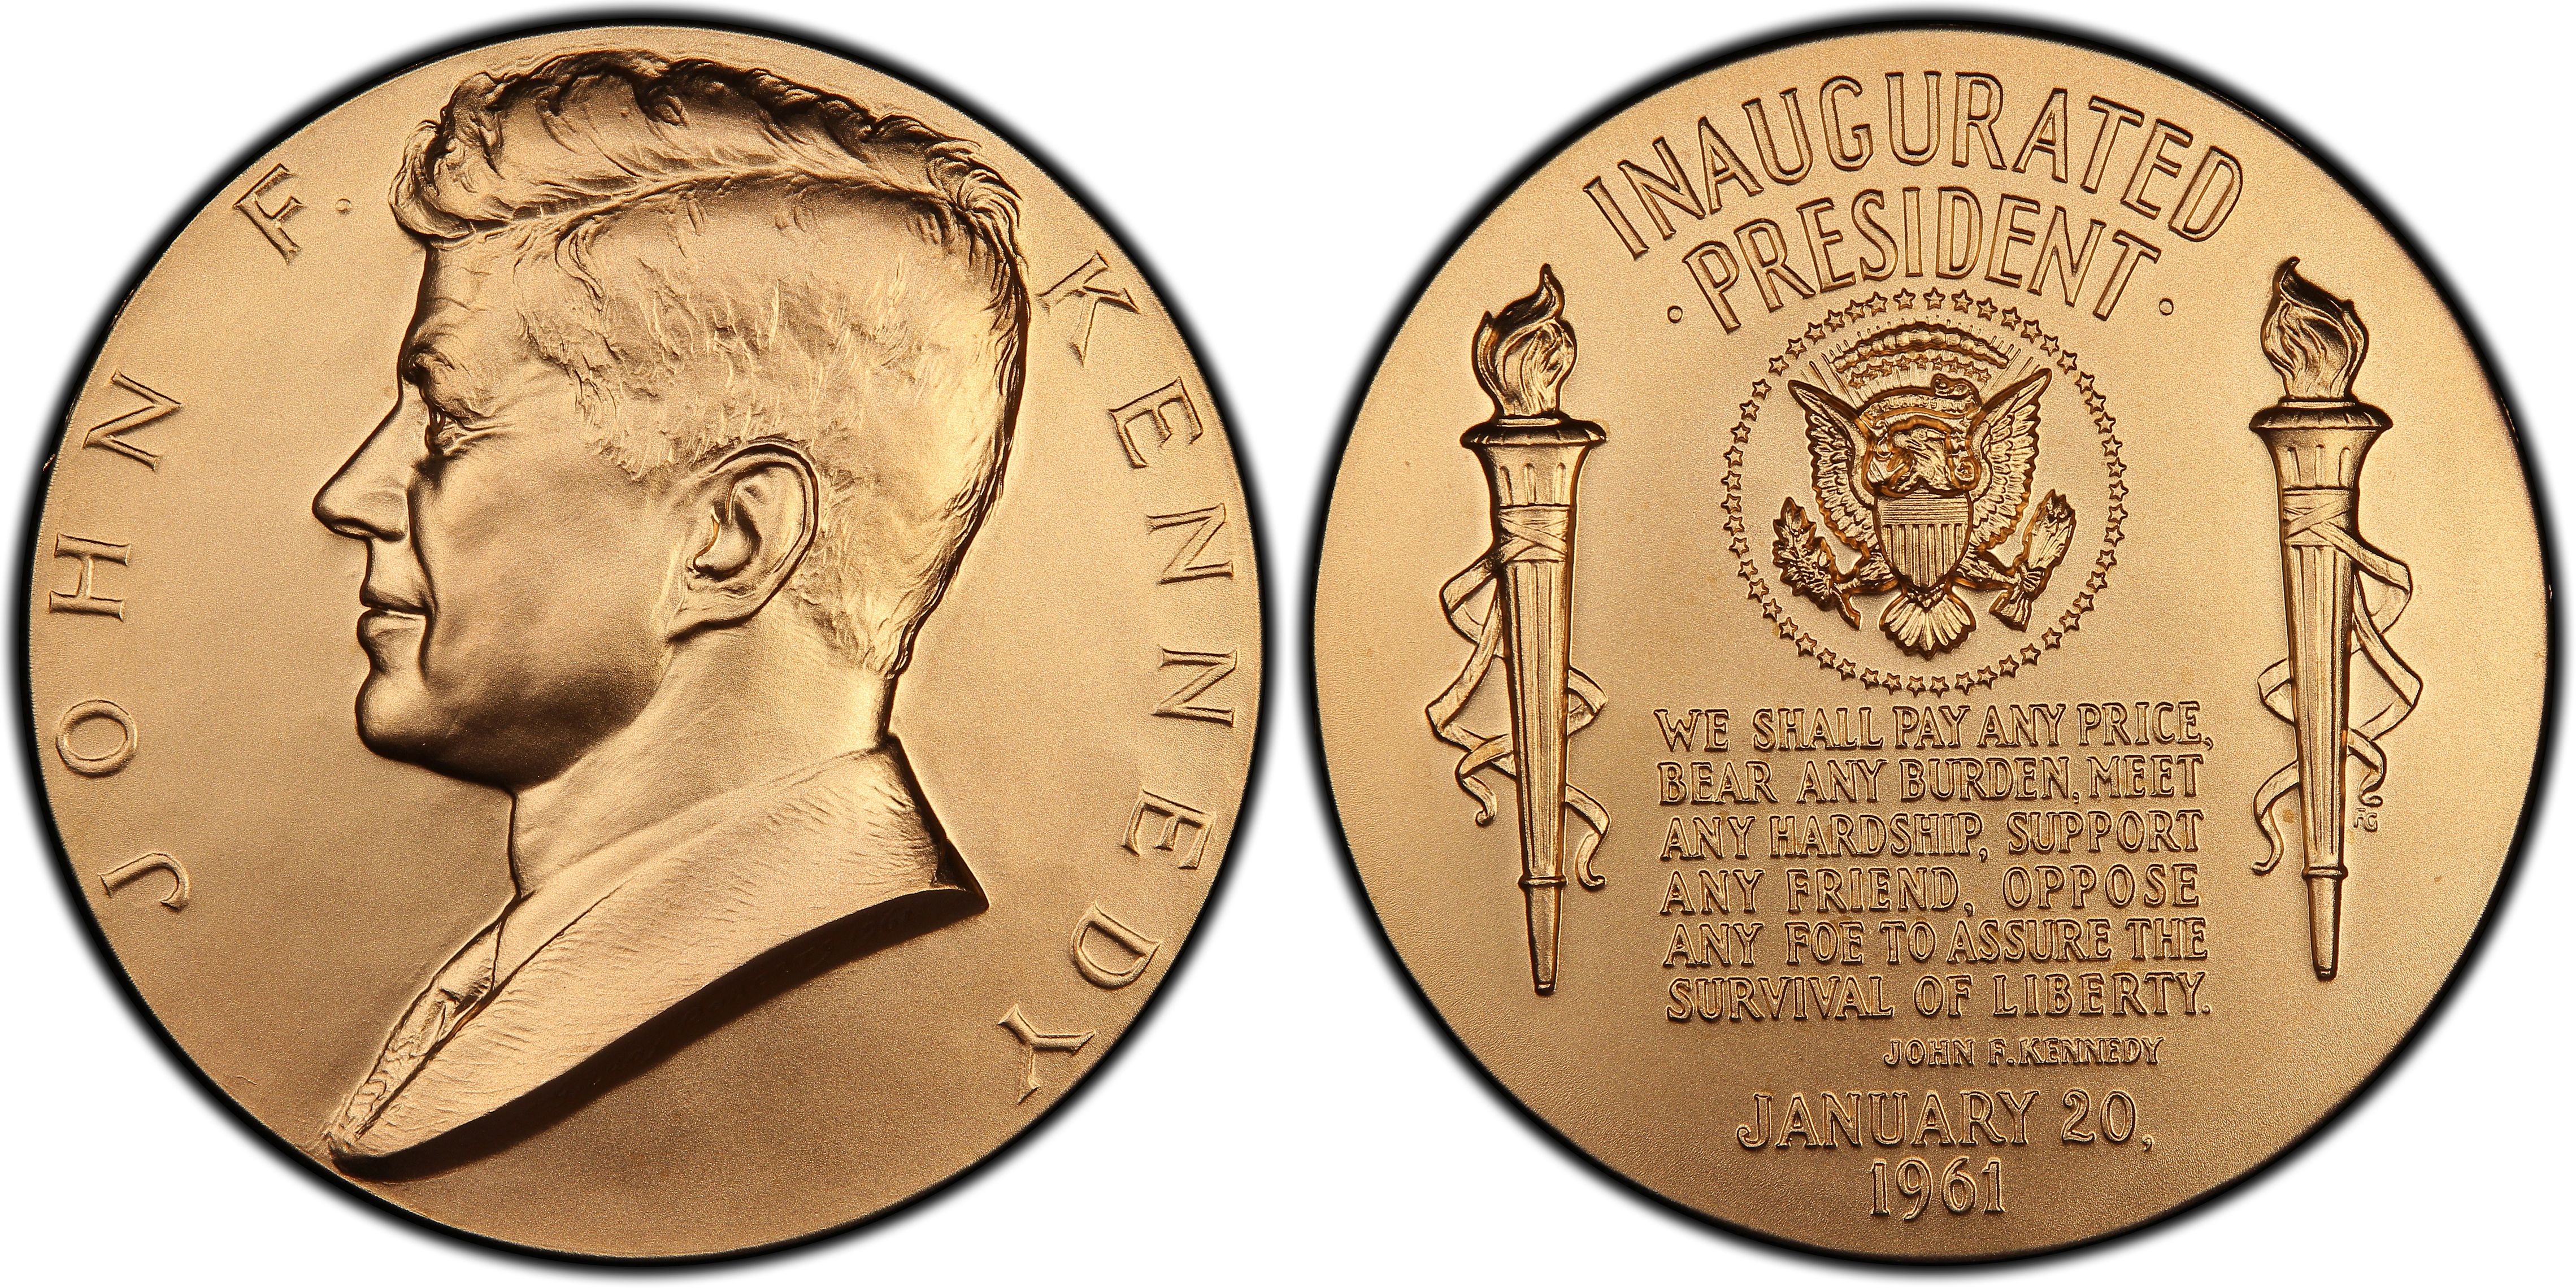 1961 Medallic Art USA 35th President Kennedy 1.25" Bronze Medal 